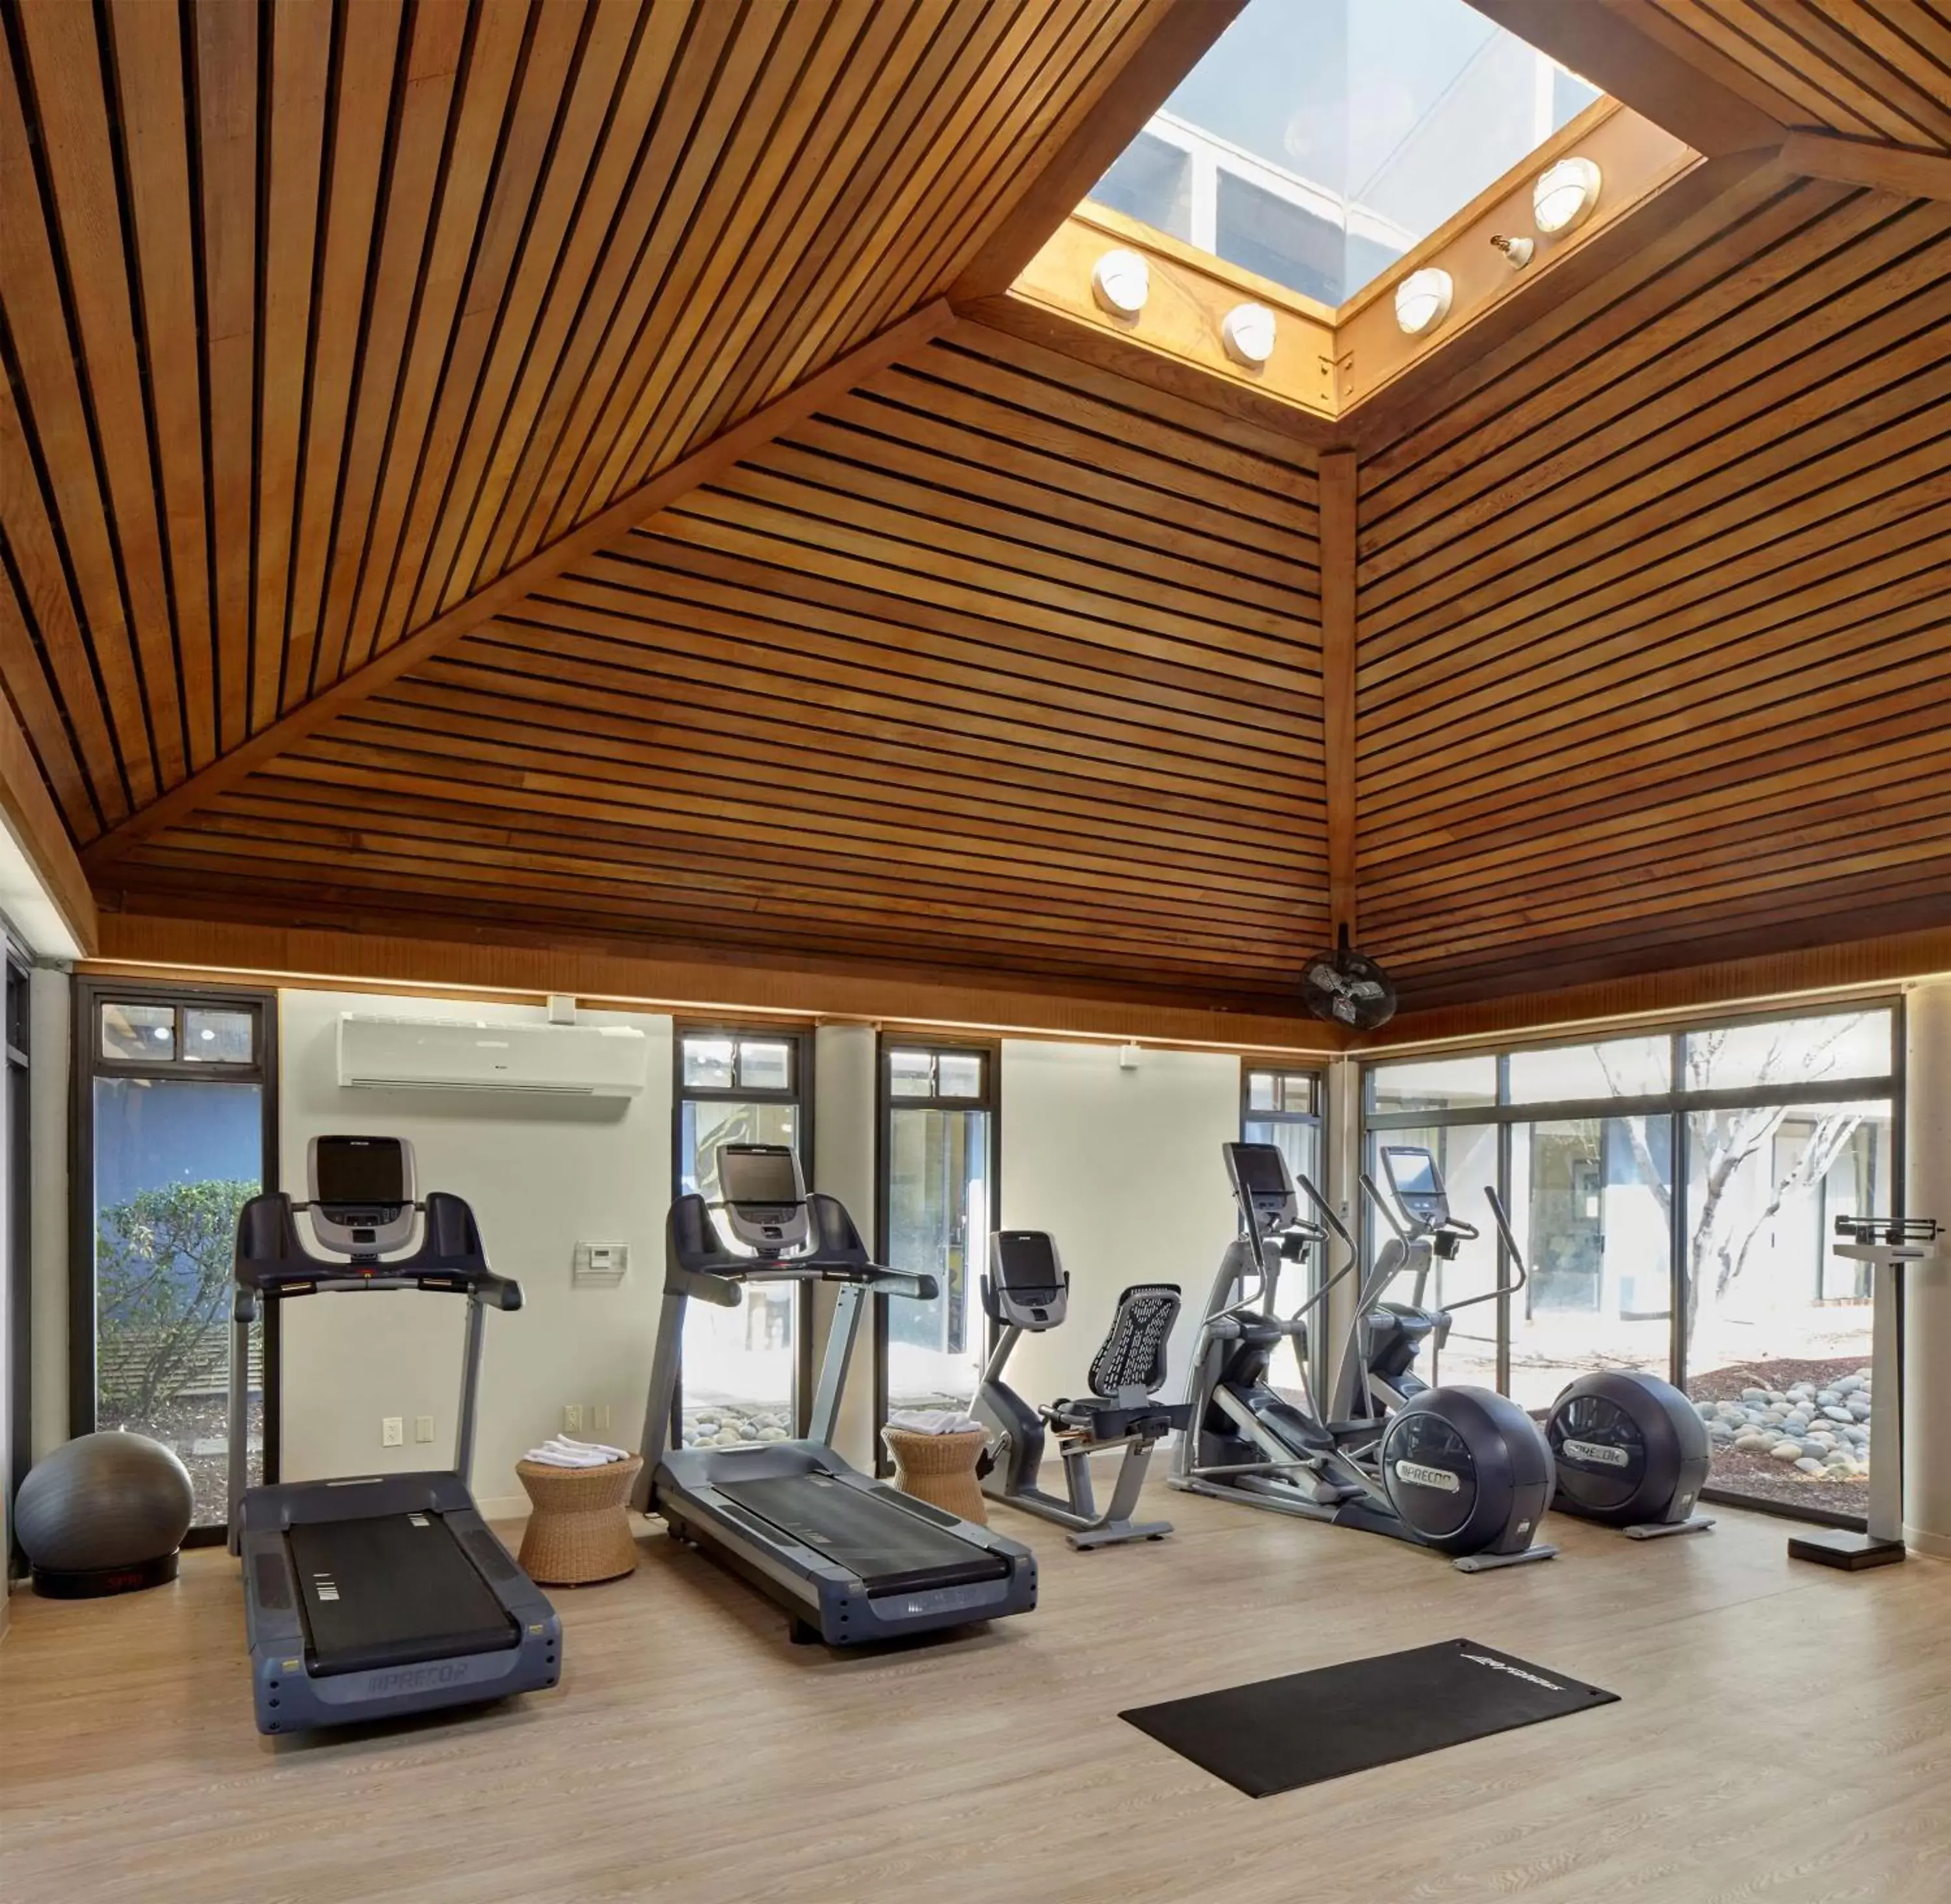 Fitness centre/facilities, Fitness Center/Facilities in DoubleTree by Hilton Hotel Berkeley Marina